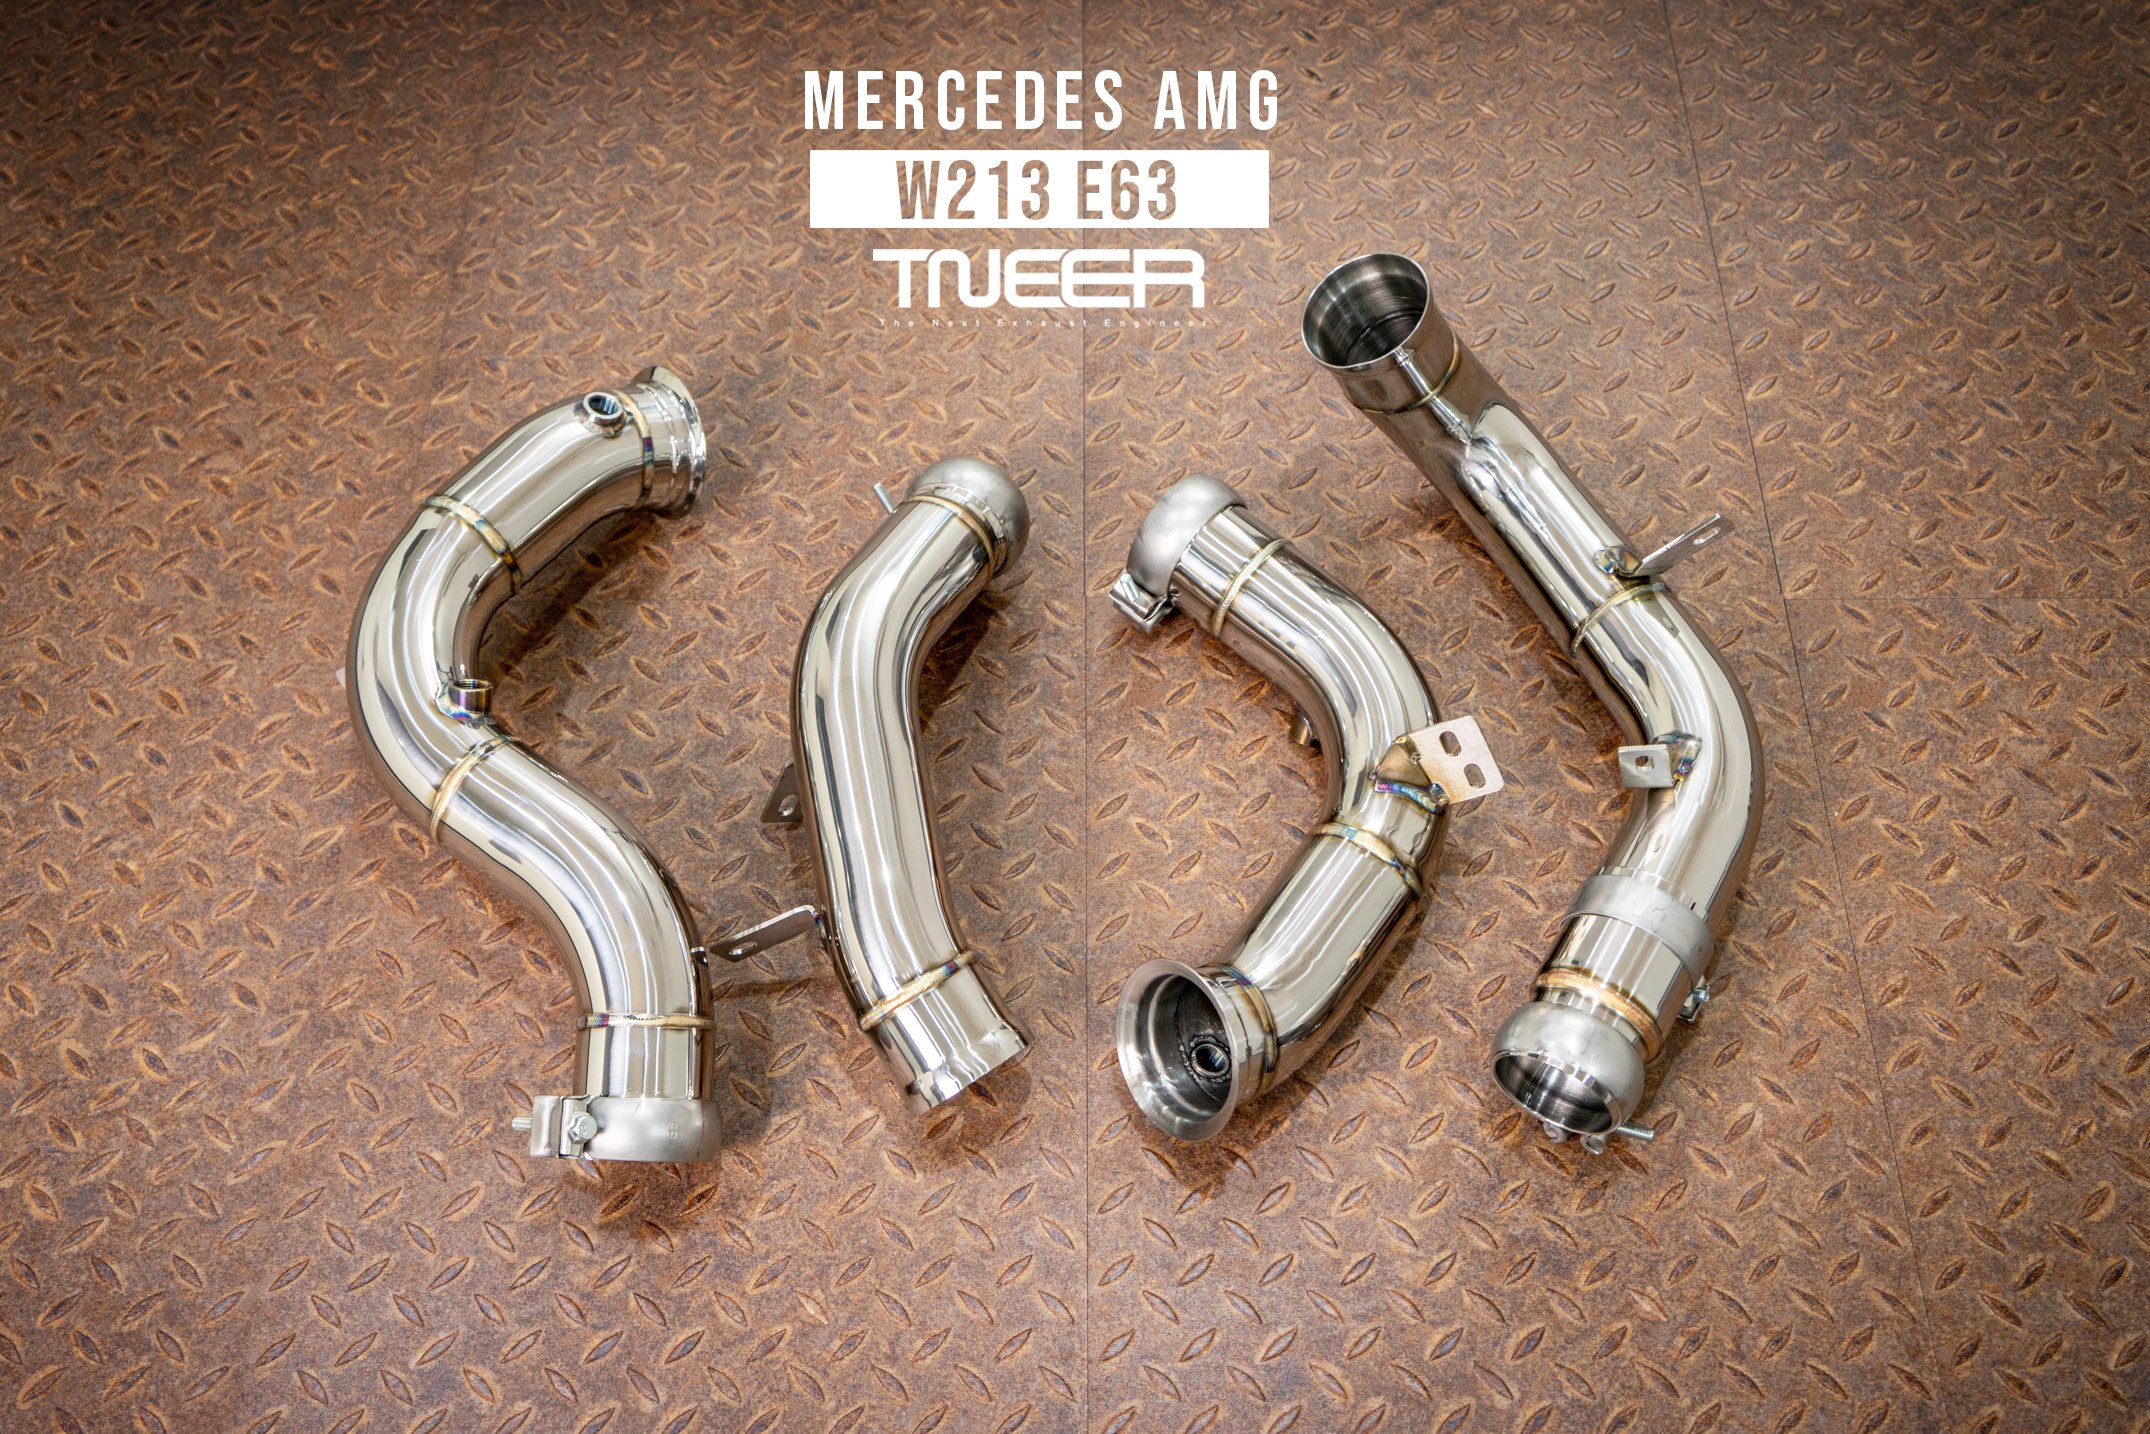 Mercedes-AMG GLC63/S (X253/C253) TNEER Performance Exhaust System